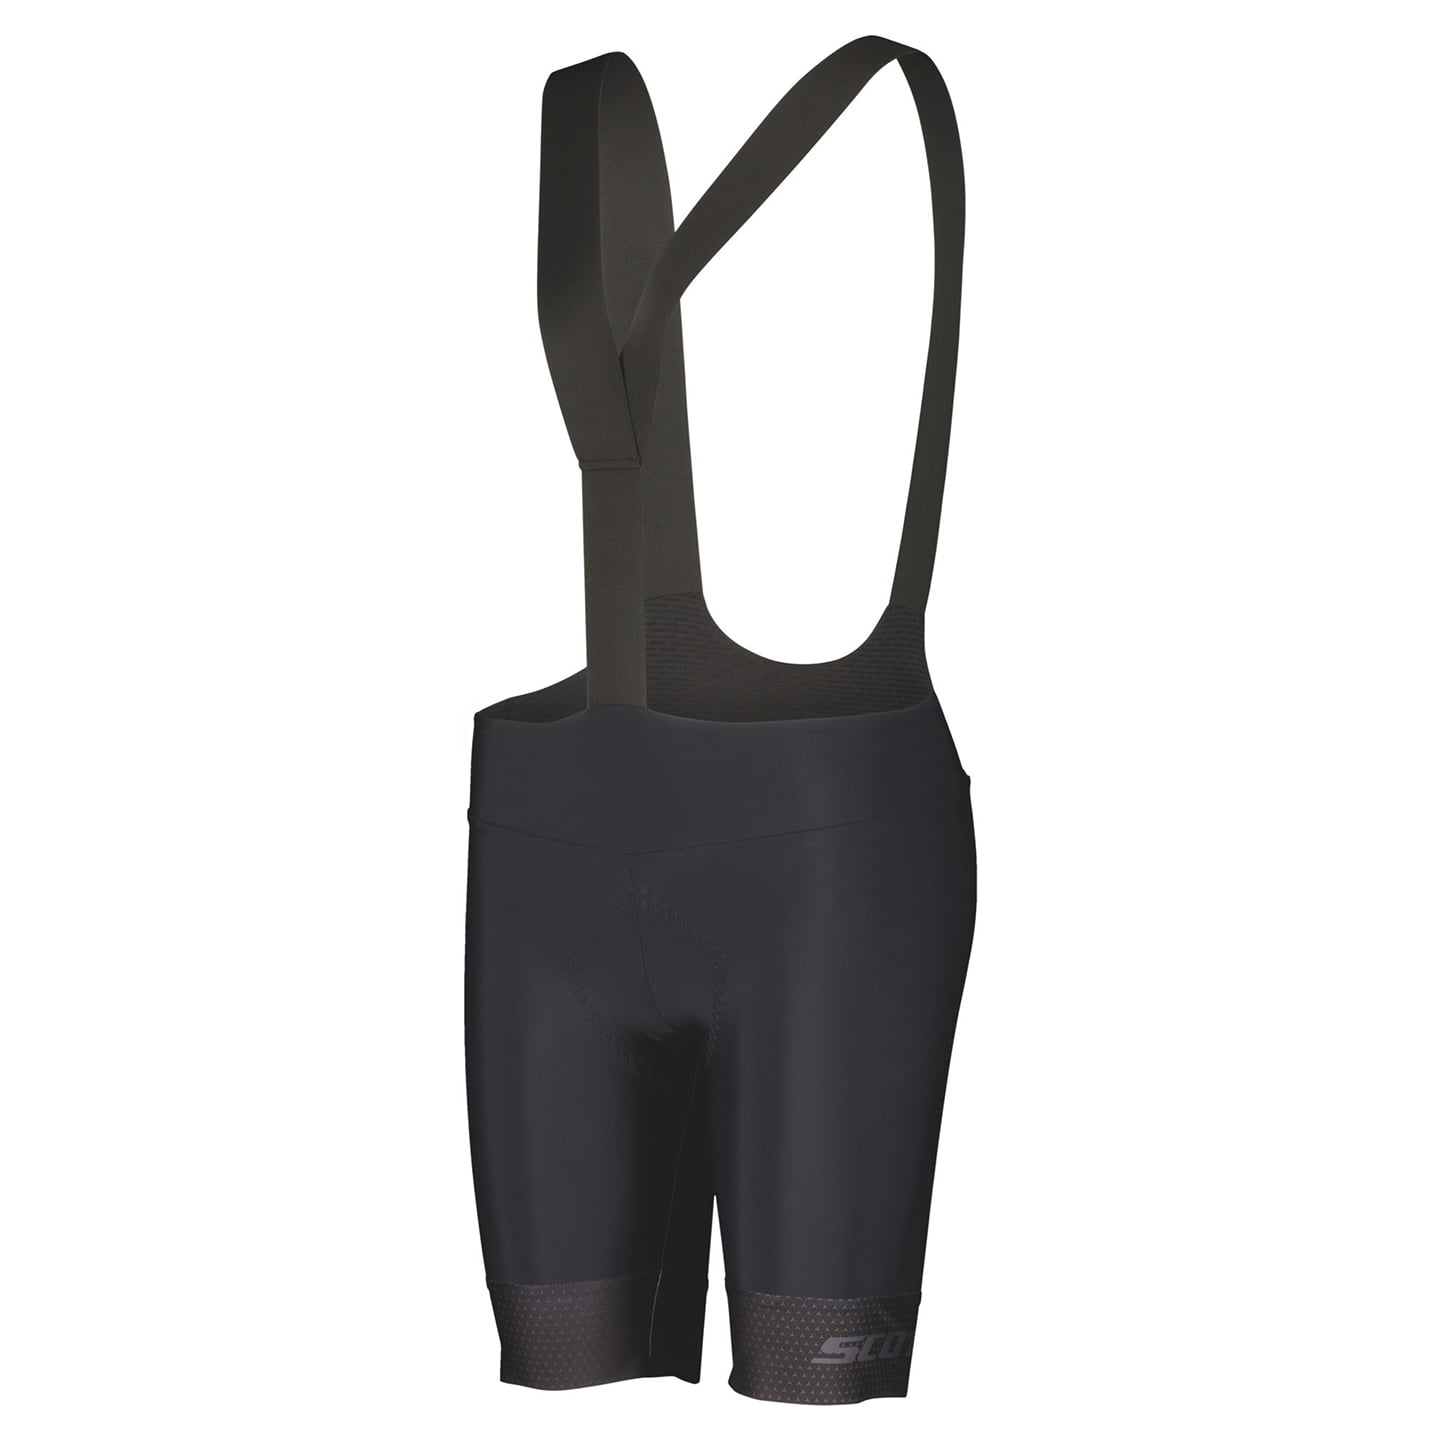 SCOTT RC Pro +++ Women’s Bib Shorts Women’s Bib Shorts, size S, Cycle trousers, Cycle clothing